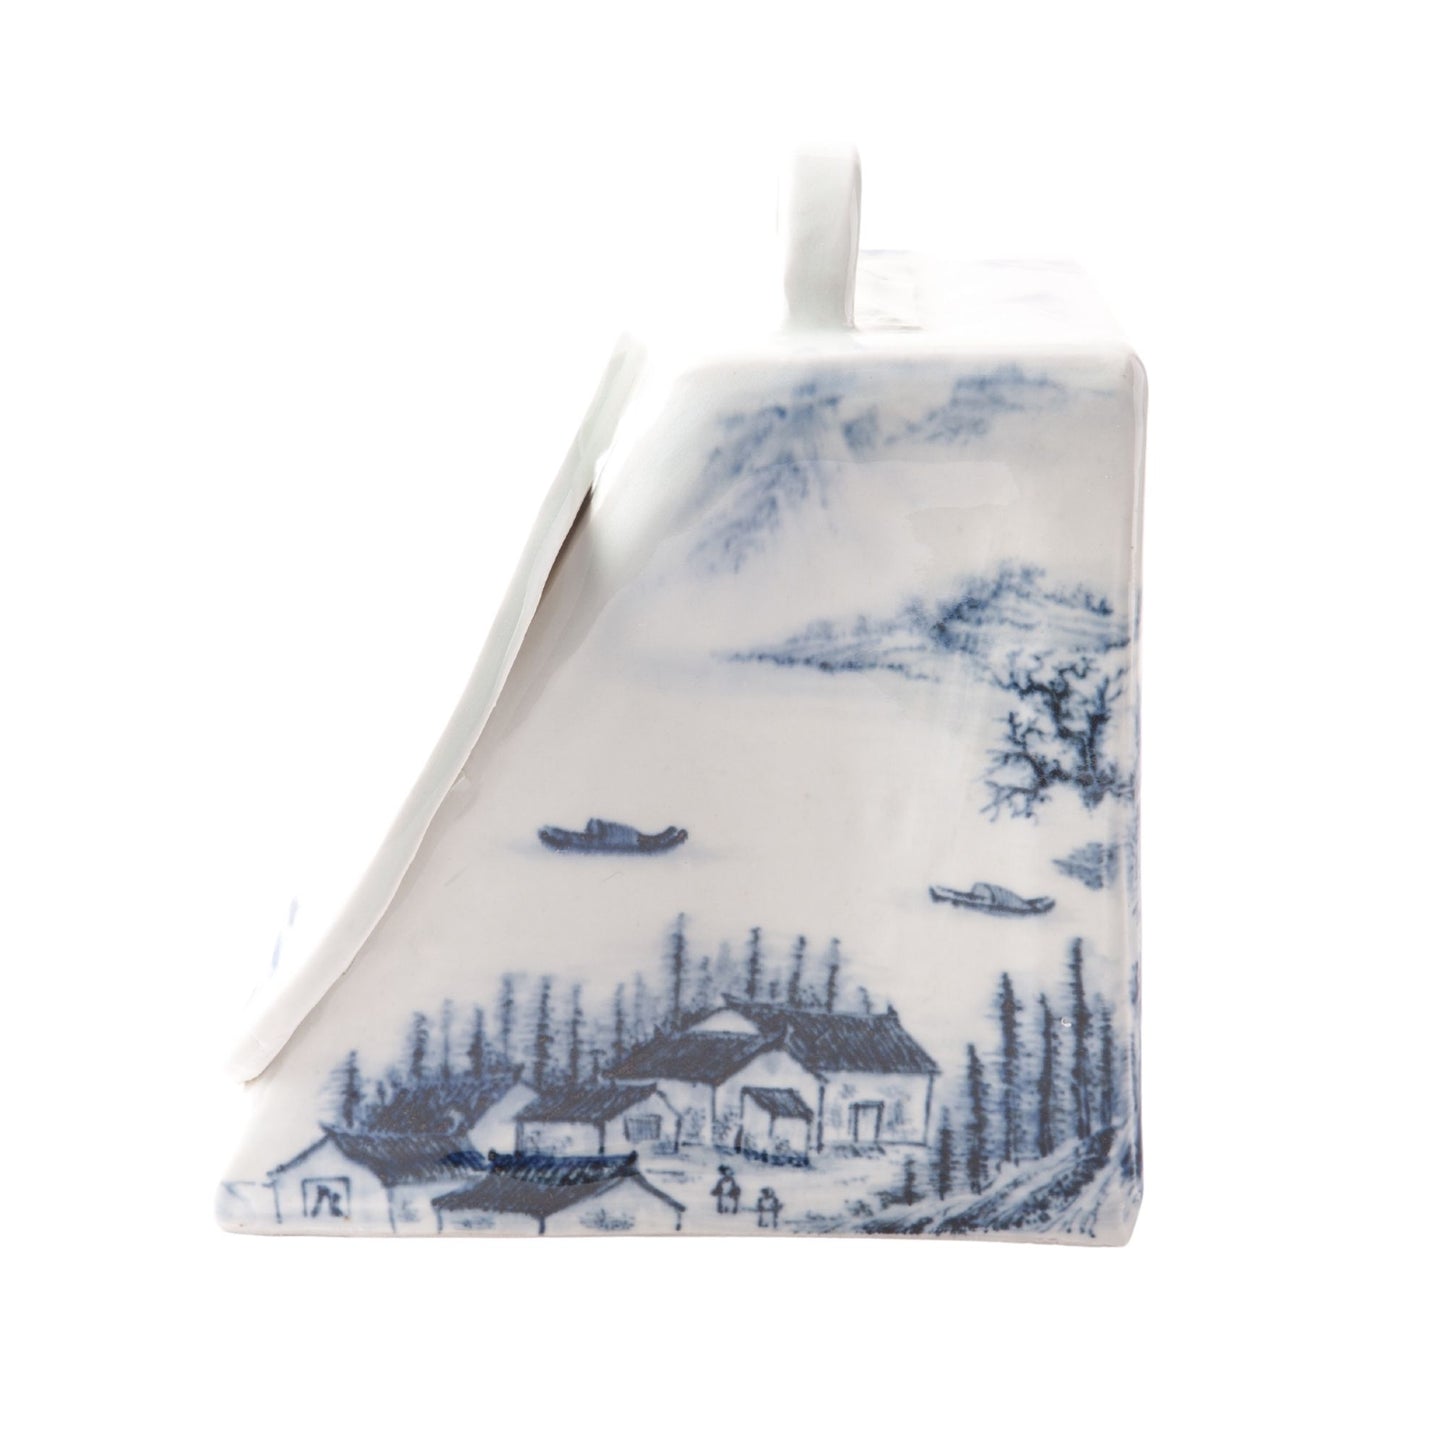 Conceptual Ceramics collection - Feng Shui 911